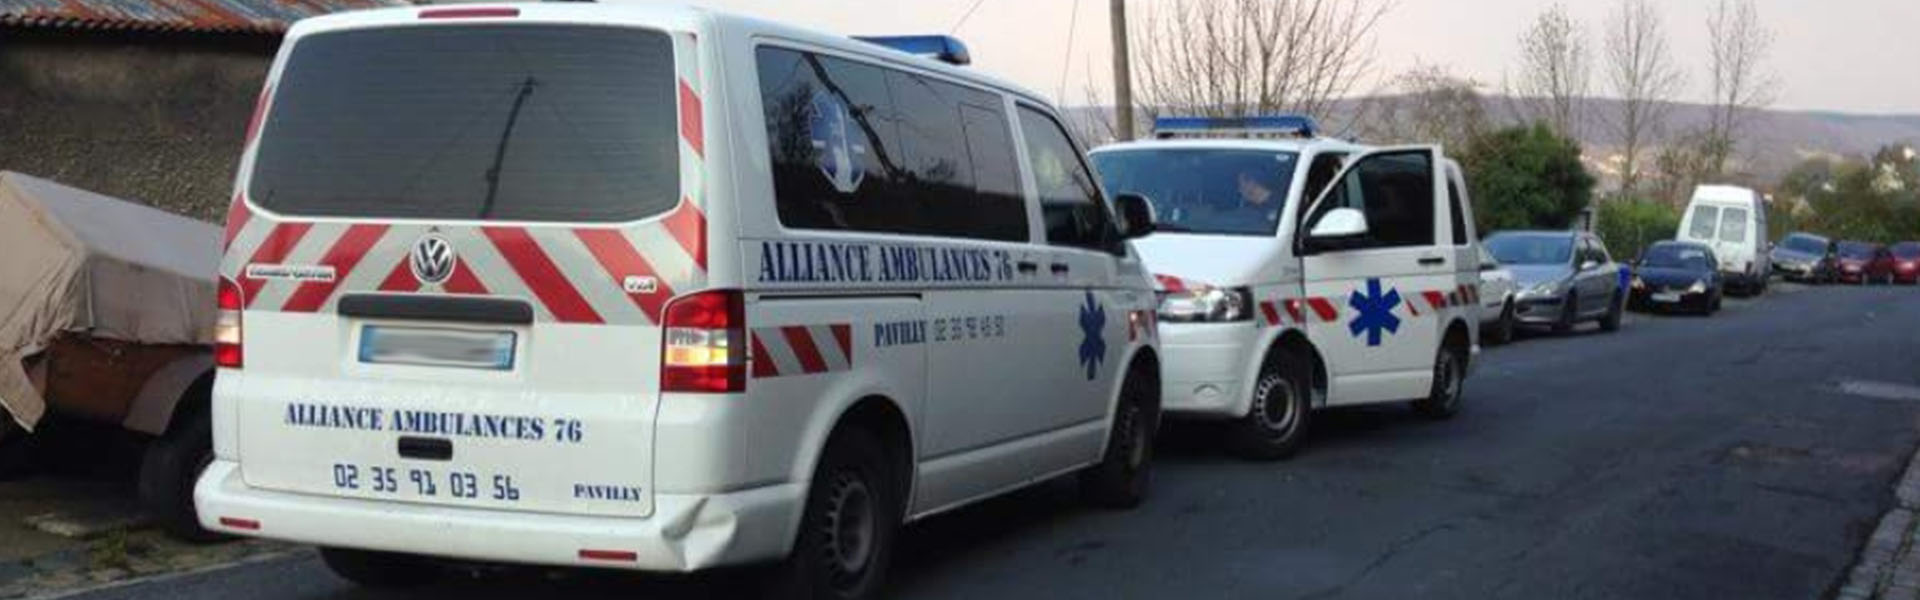 Ambulances alliances 76